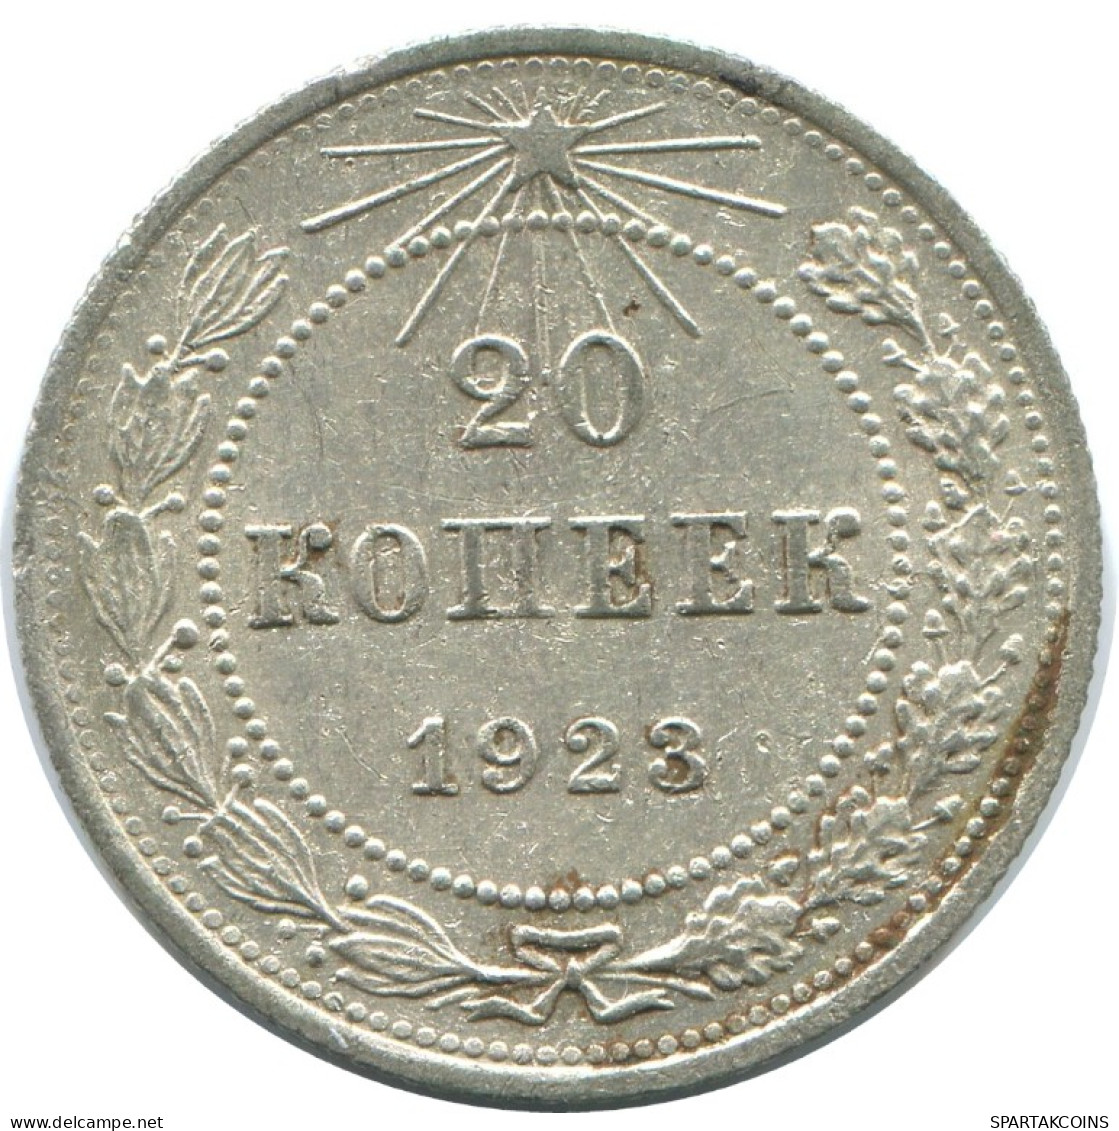 20 KOPEKS 1923 RUSSIA RSFSR SILVER Coin HIGH GRADE #AF450.4.U.A - Russia